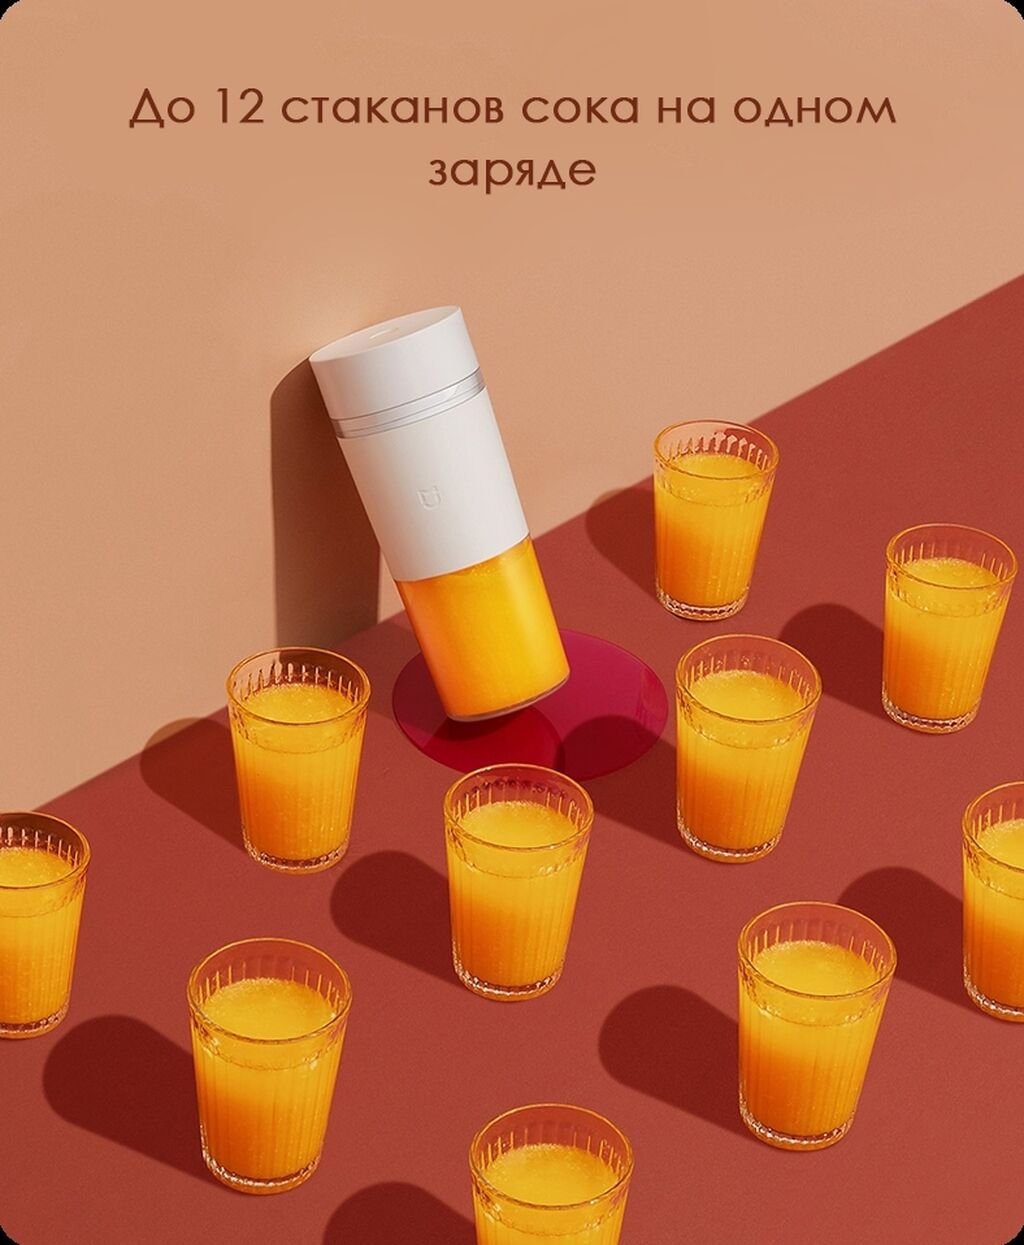 Xiaomi mijia portable juicer cup